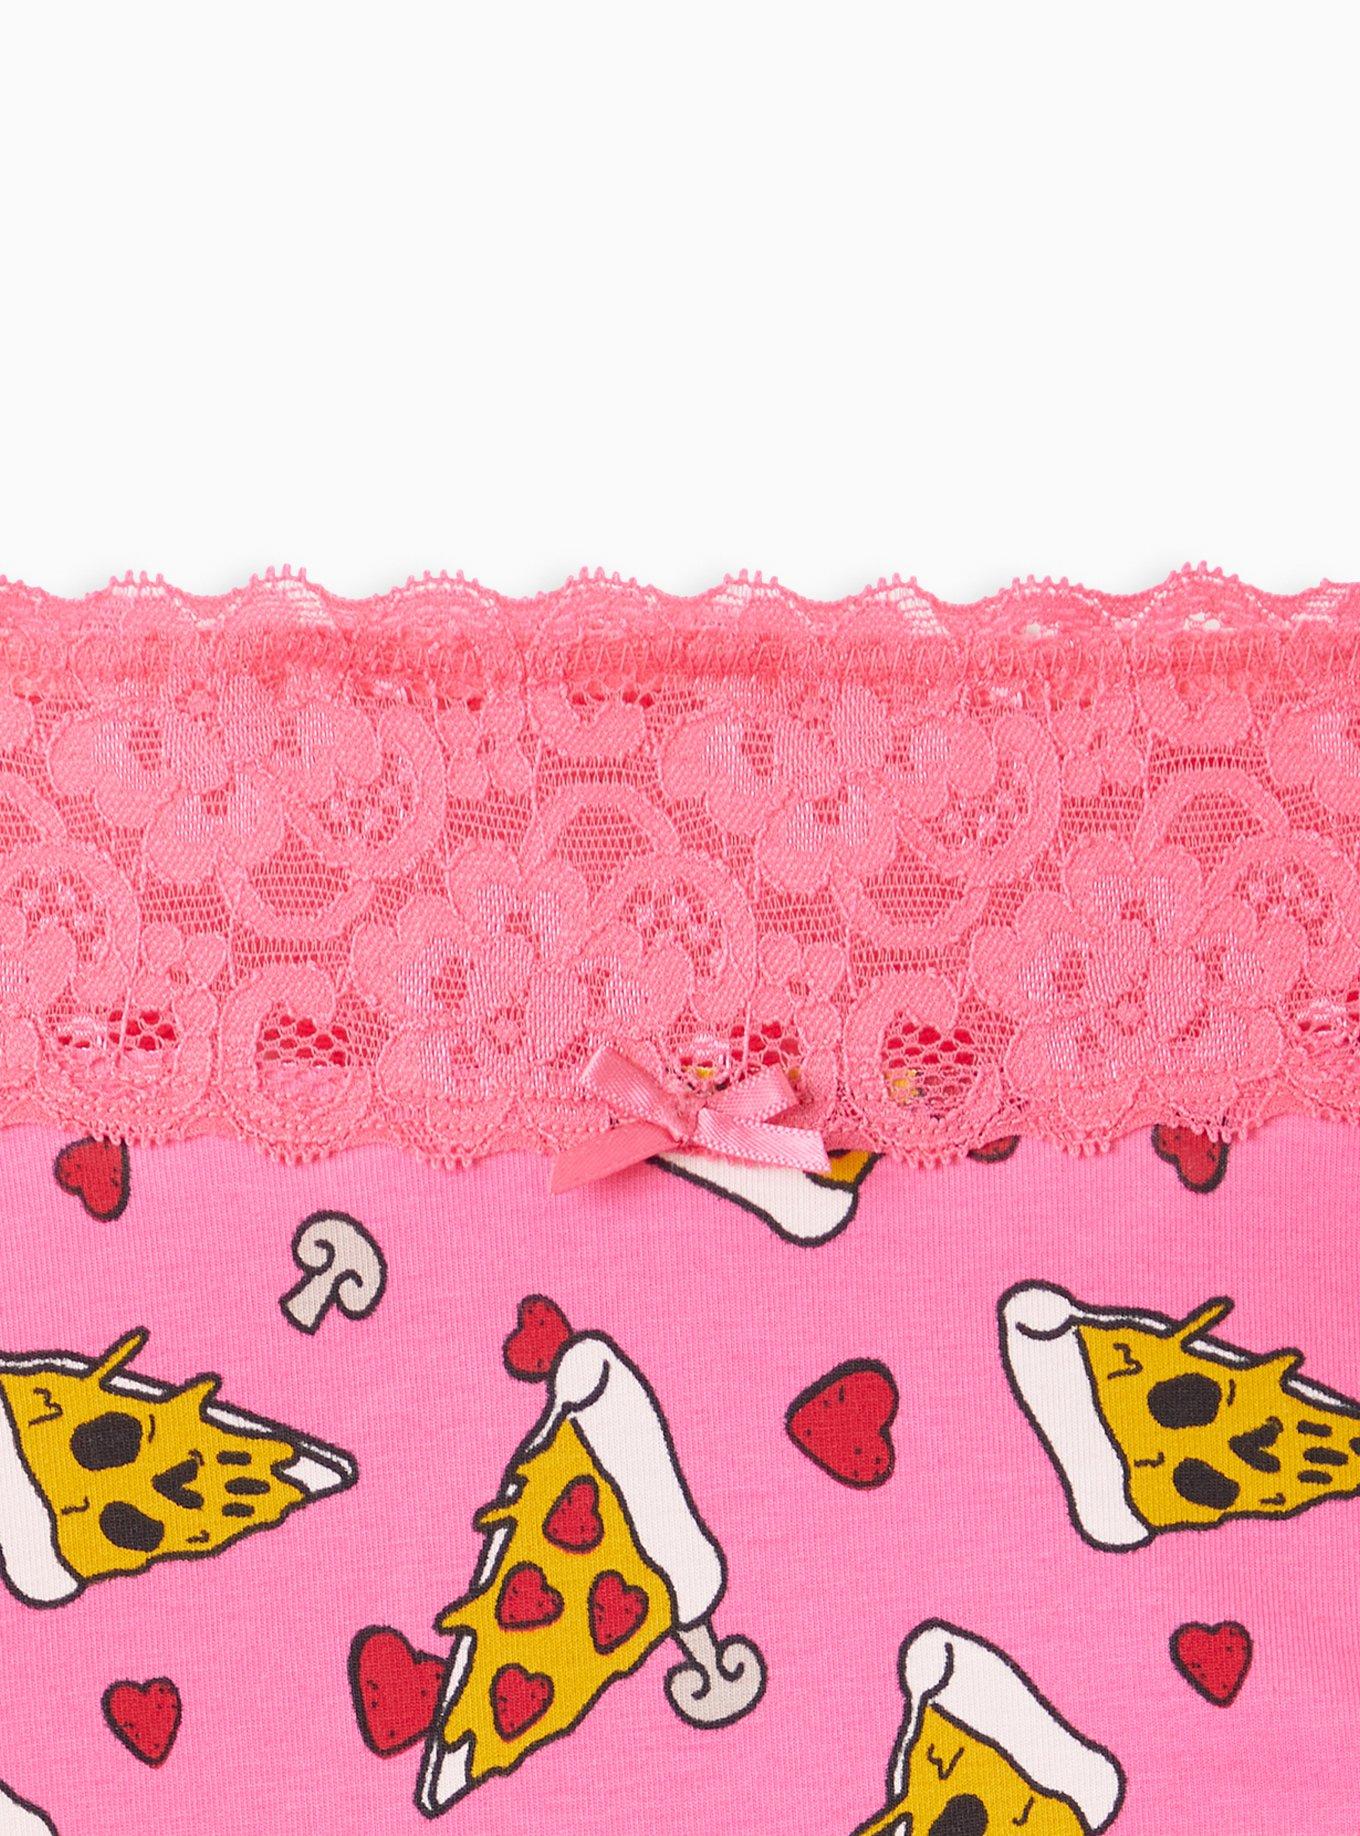 Stawberry Pattern Printed 95% Cotton Women Underwear Panties